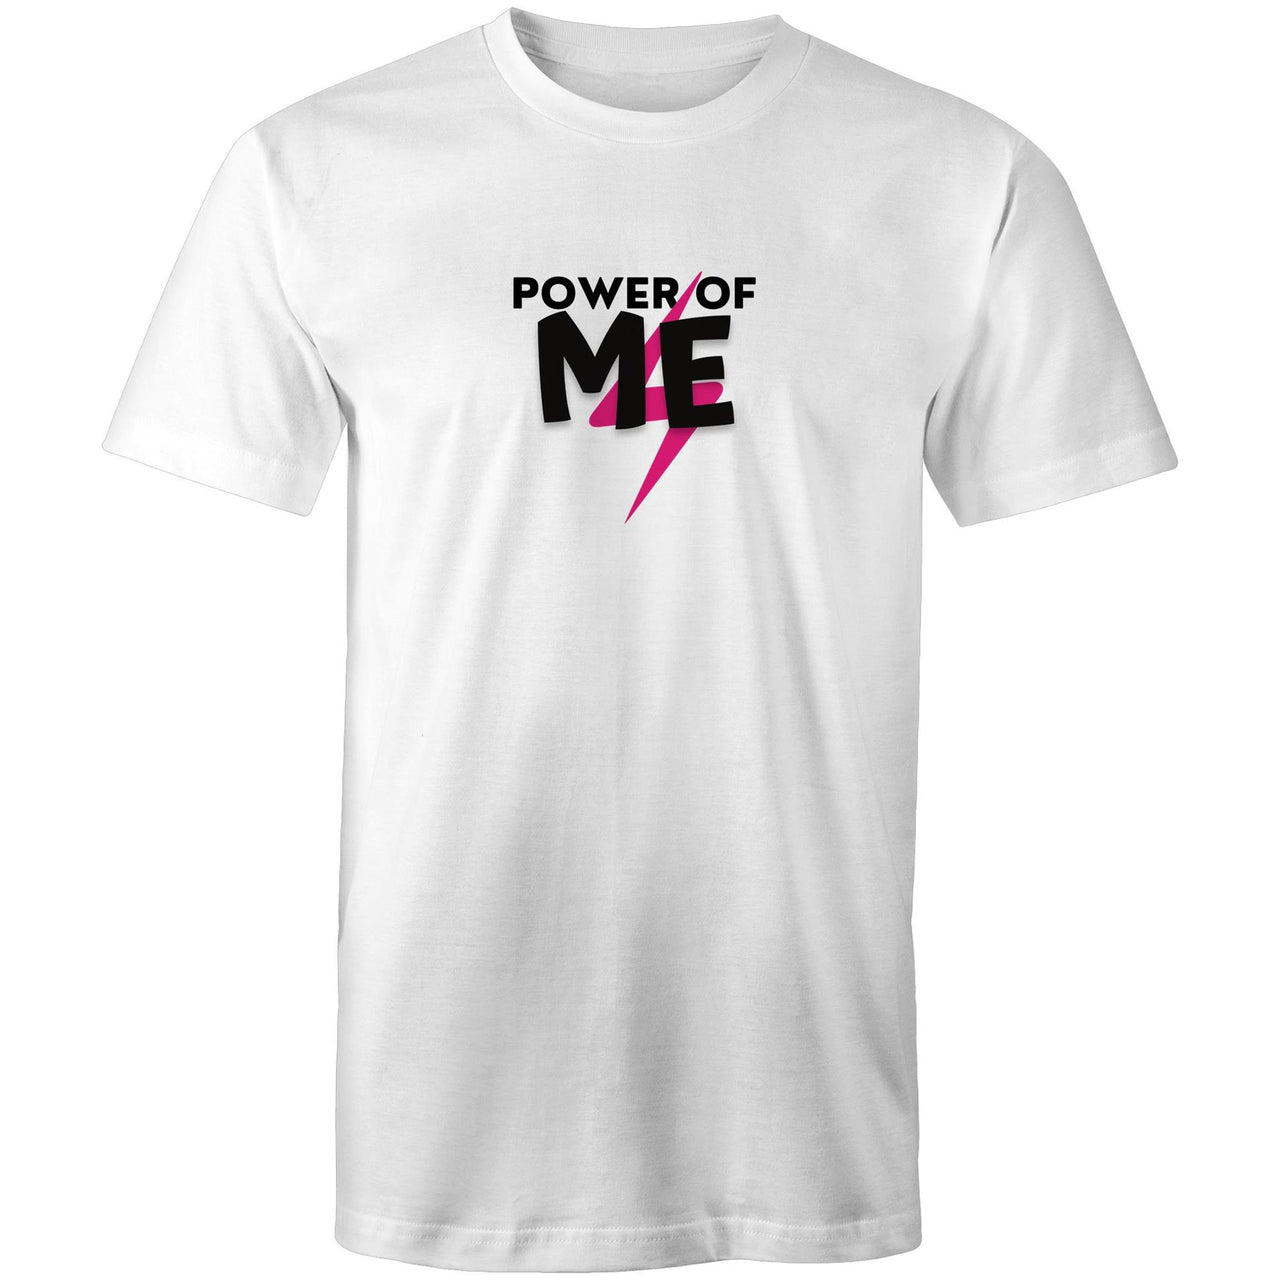 CBF Power of Me Crew T-Shirt white by CBF Clothing